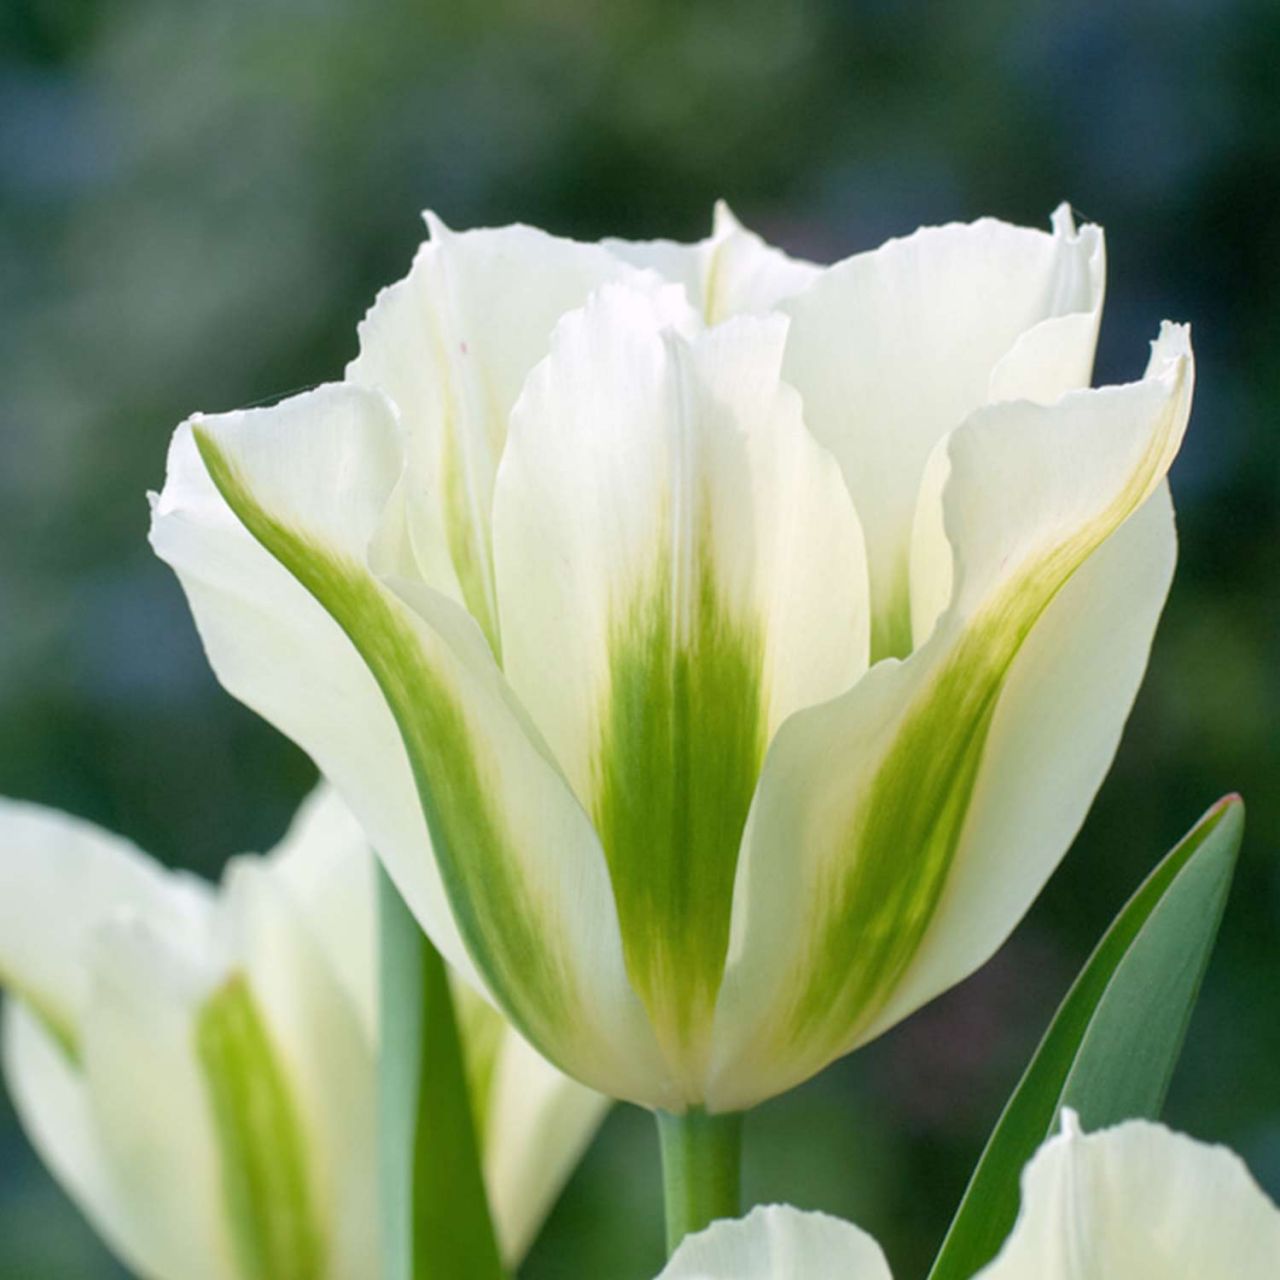 Kategorie <b>Herbst-Blumenzwiebeln </b> - Viridiflora Tulpe 'Spring Green' - 7 Stück - Tulipa viridiflora 'Spring Green'